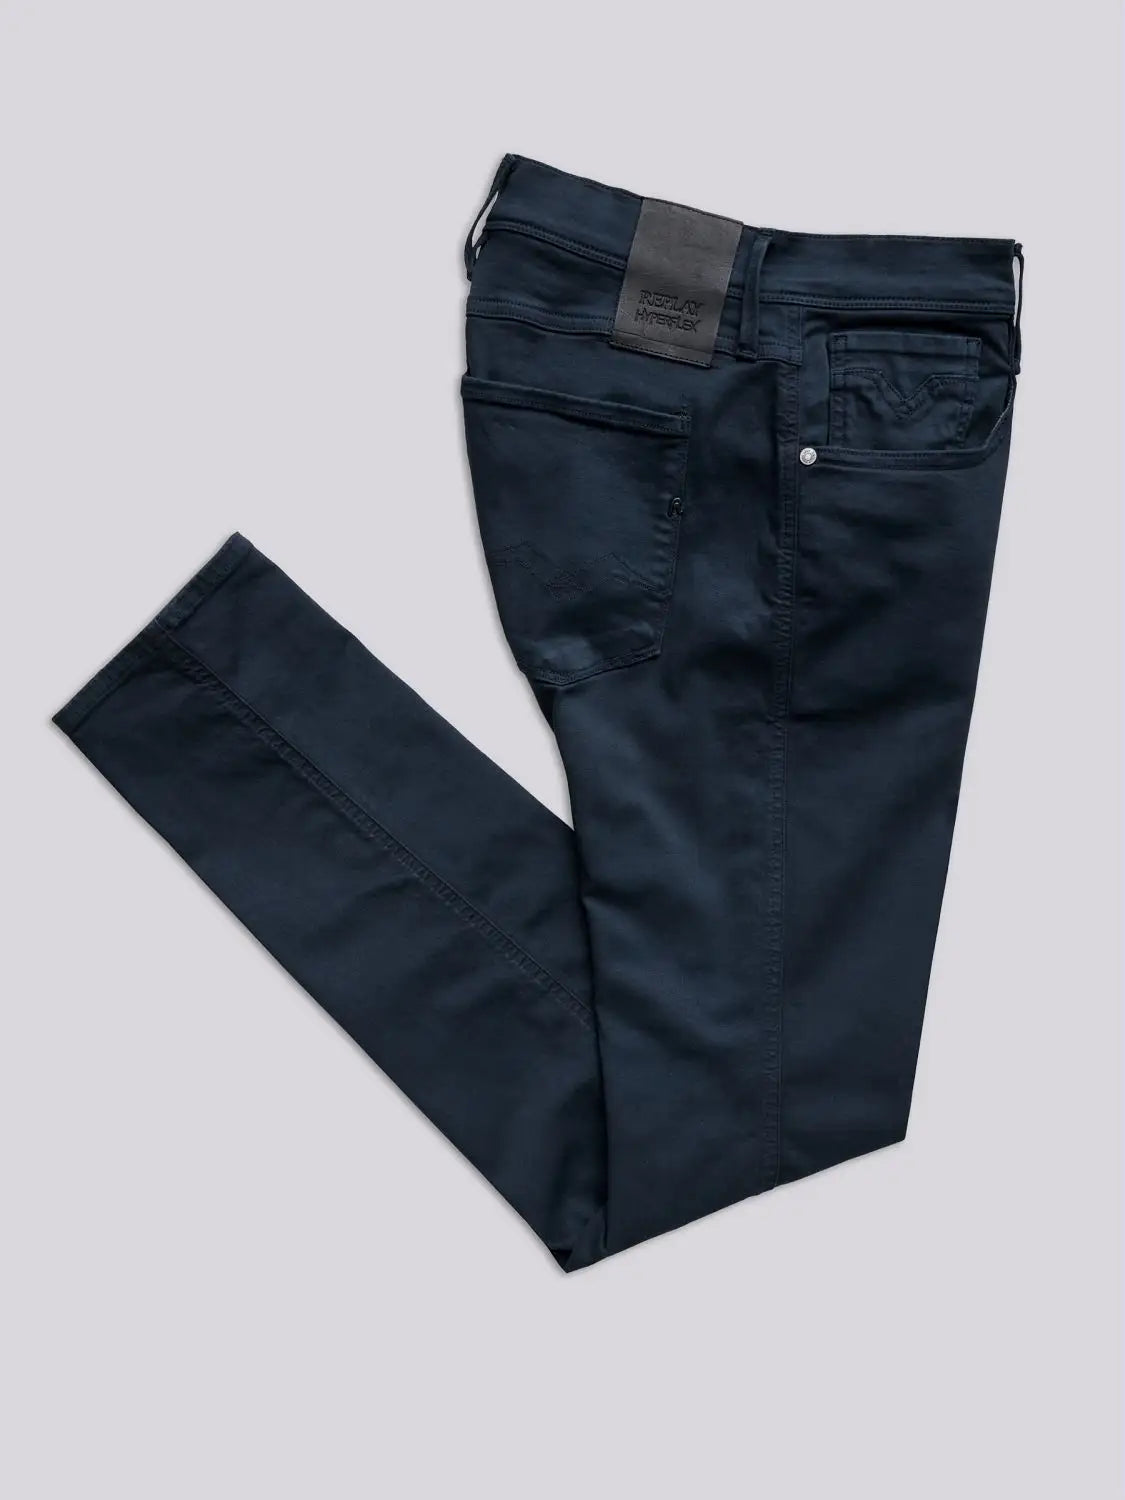 Replay Slim Fit Anbass Hyperflex X-Lite Blue Jeans - M914Y .000.8366197 .010